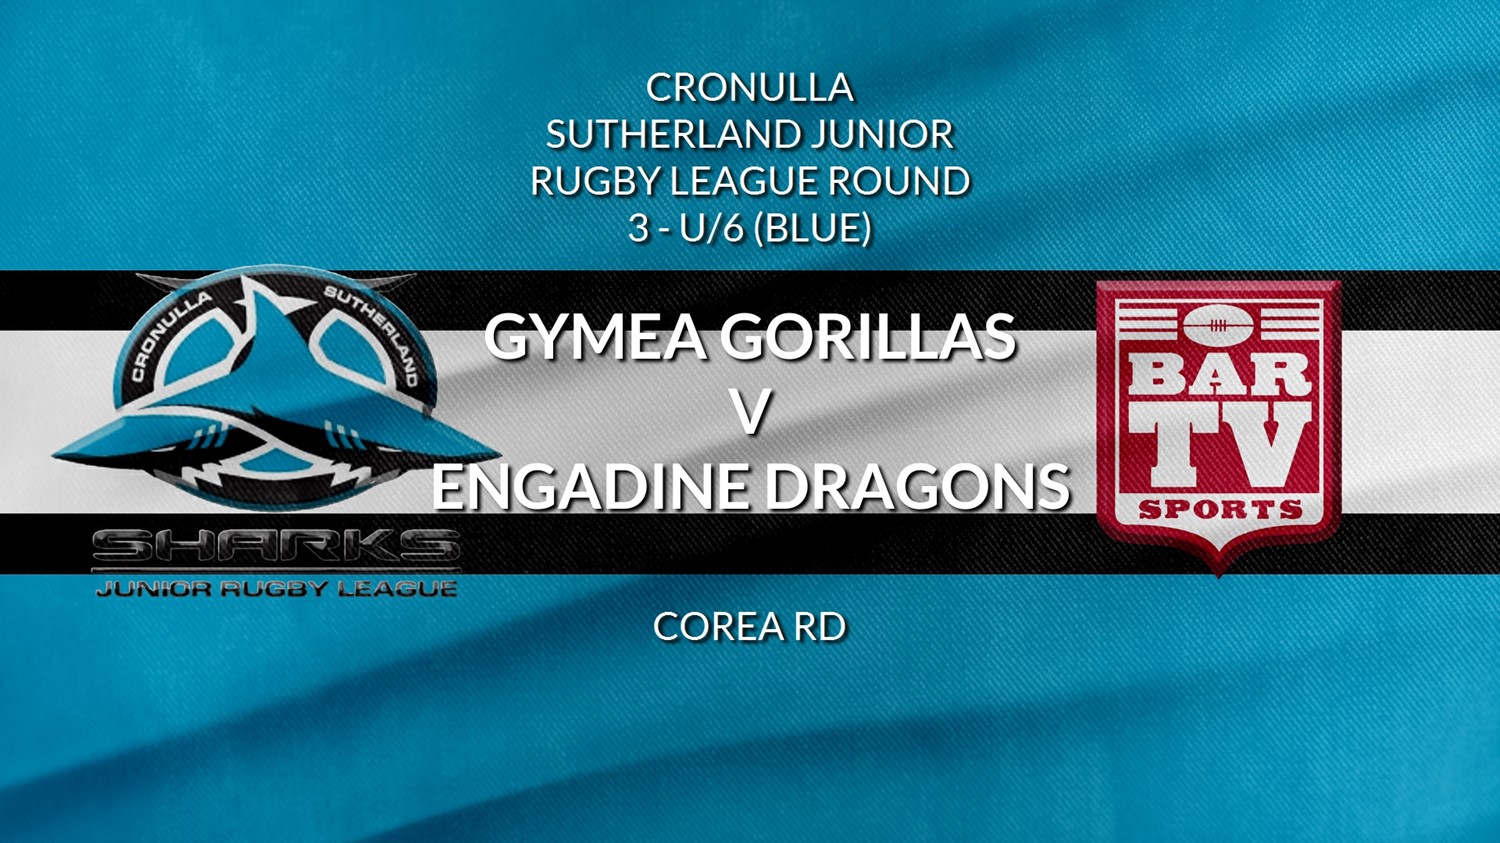 Cronulla Sutherland Junior Rugby League Round 3 - U/6 (Blue) - Gymea Gorillas v Engadine Dragons Minigame Slate Image